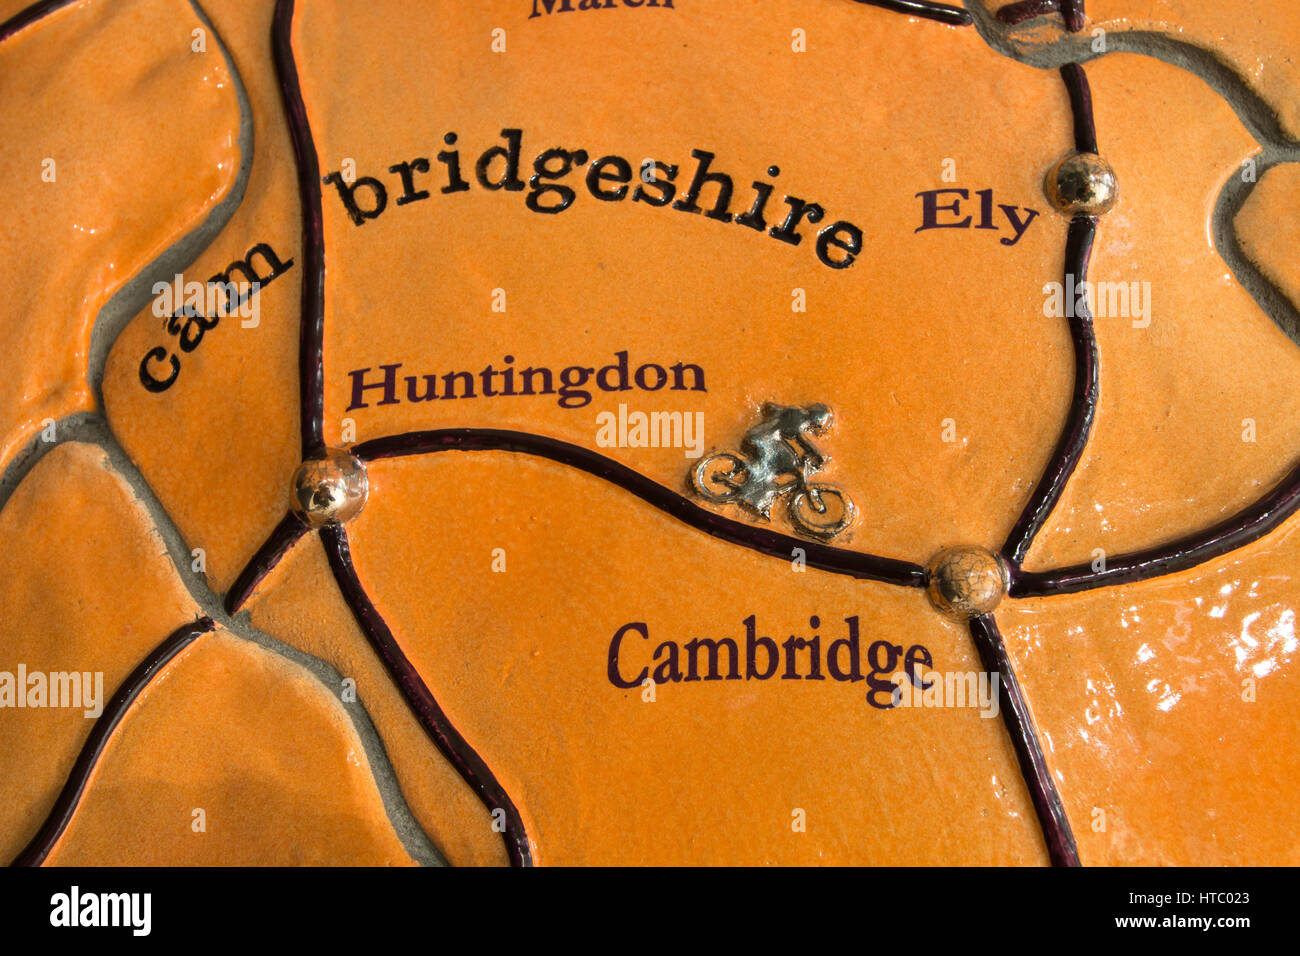 CYCLING: Cambridgeshire cycle paths linking Huntingdon, Cambridge and Ely. Stock Photo